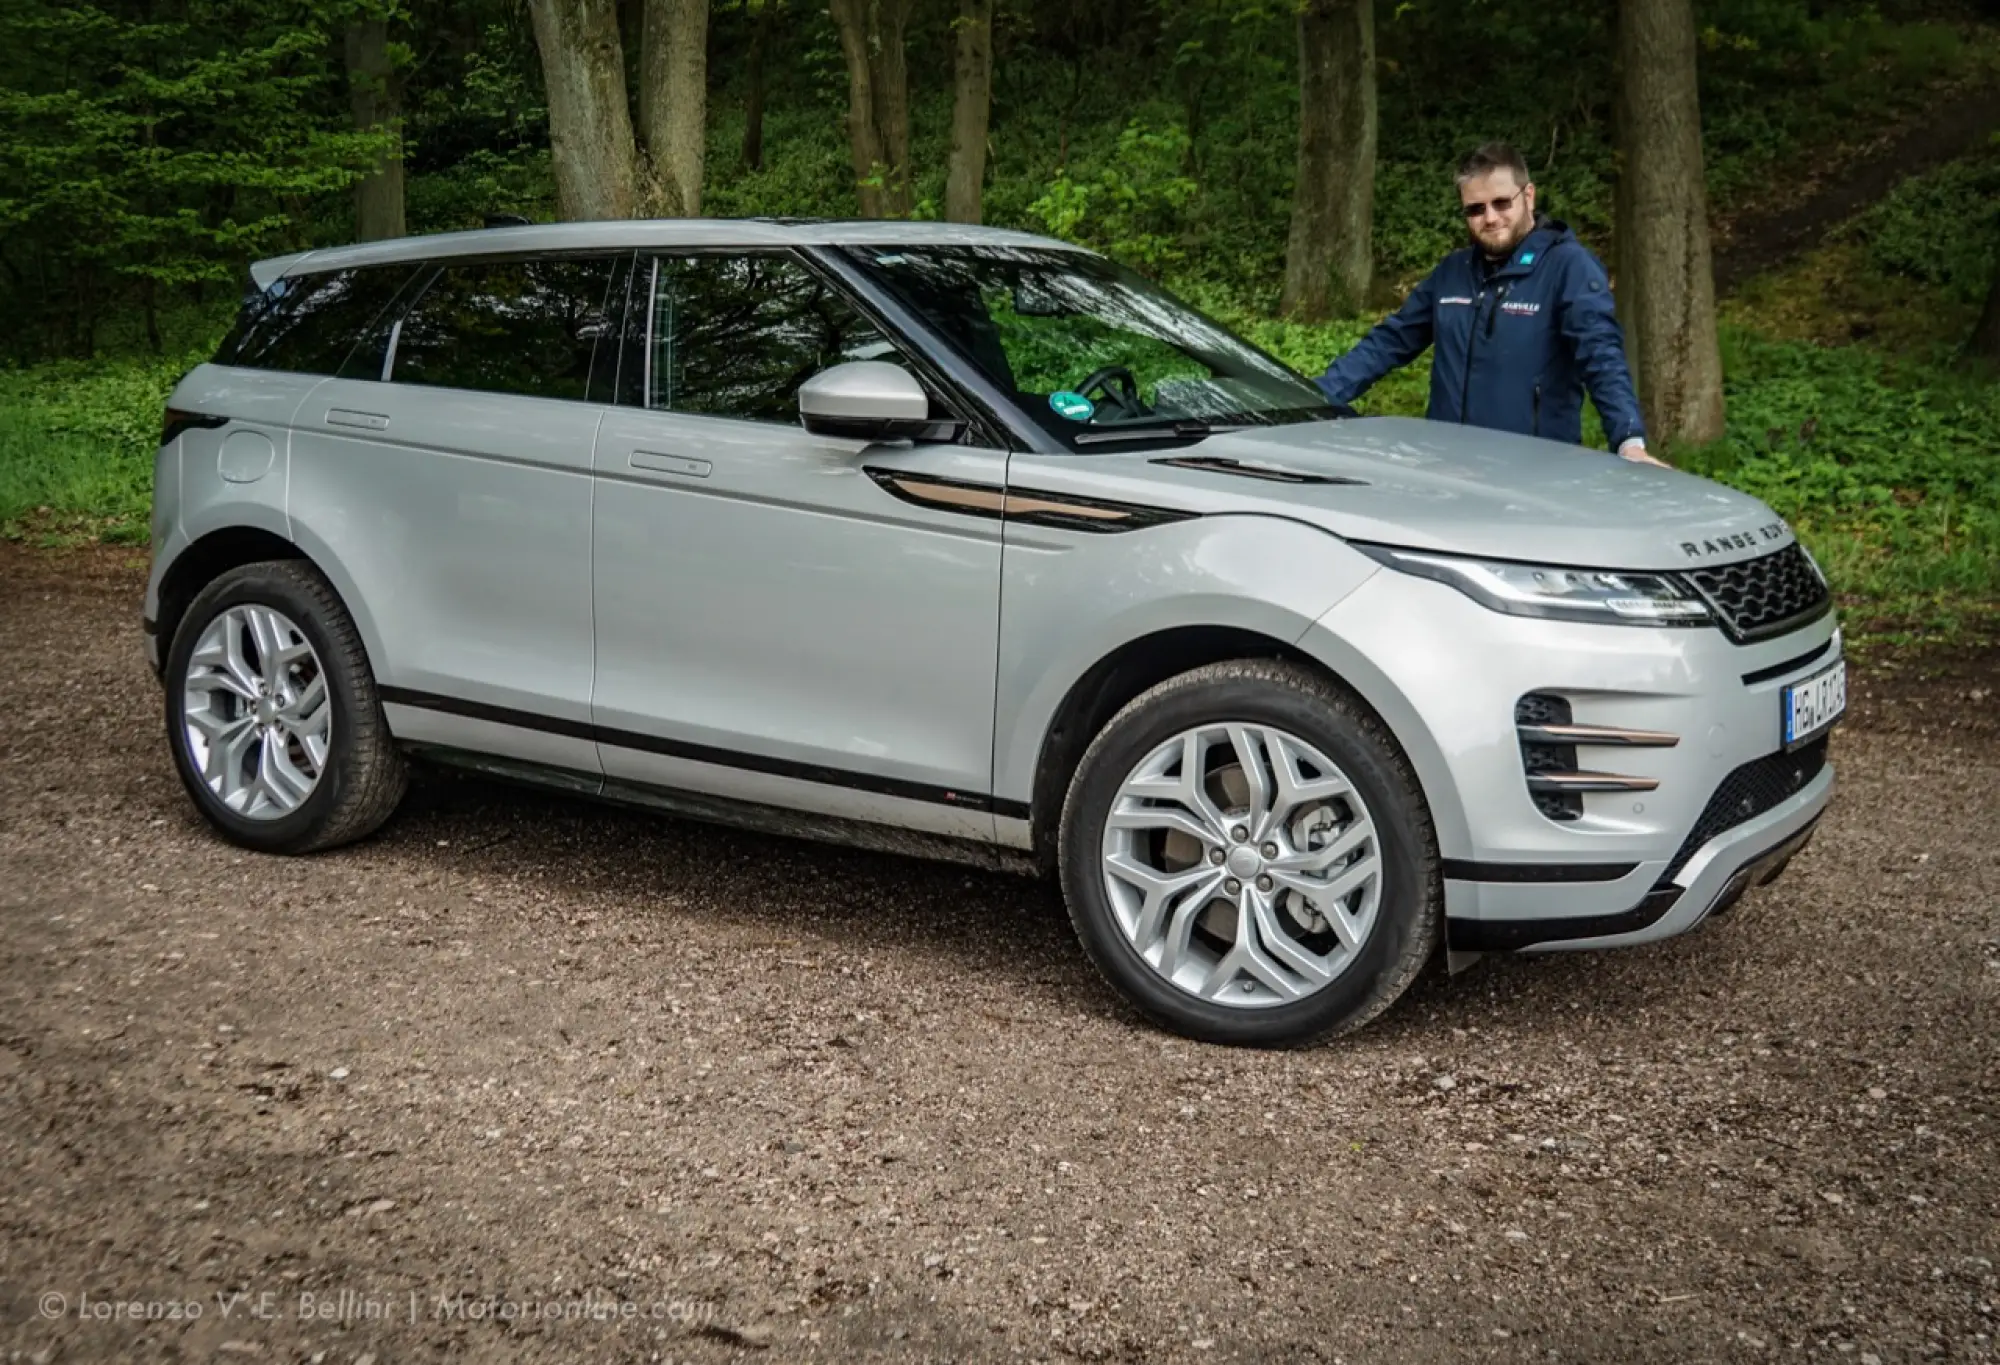 Nuova Range Rover Evoque 2019 - Test Drive in Anteprima - 3